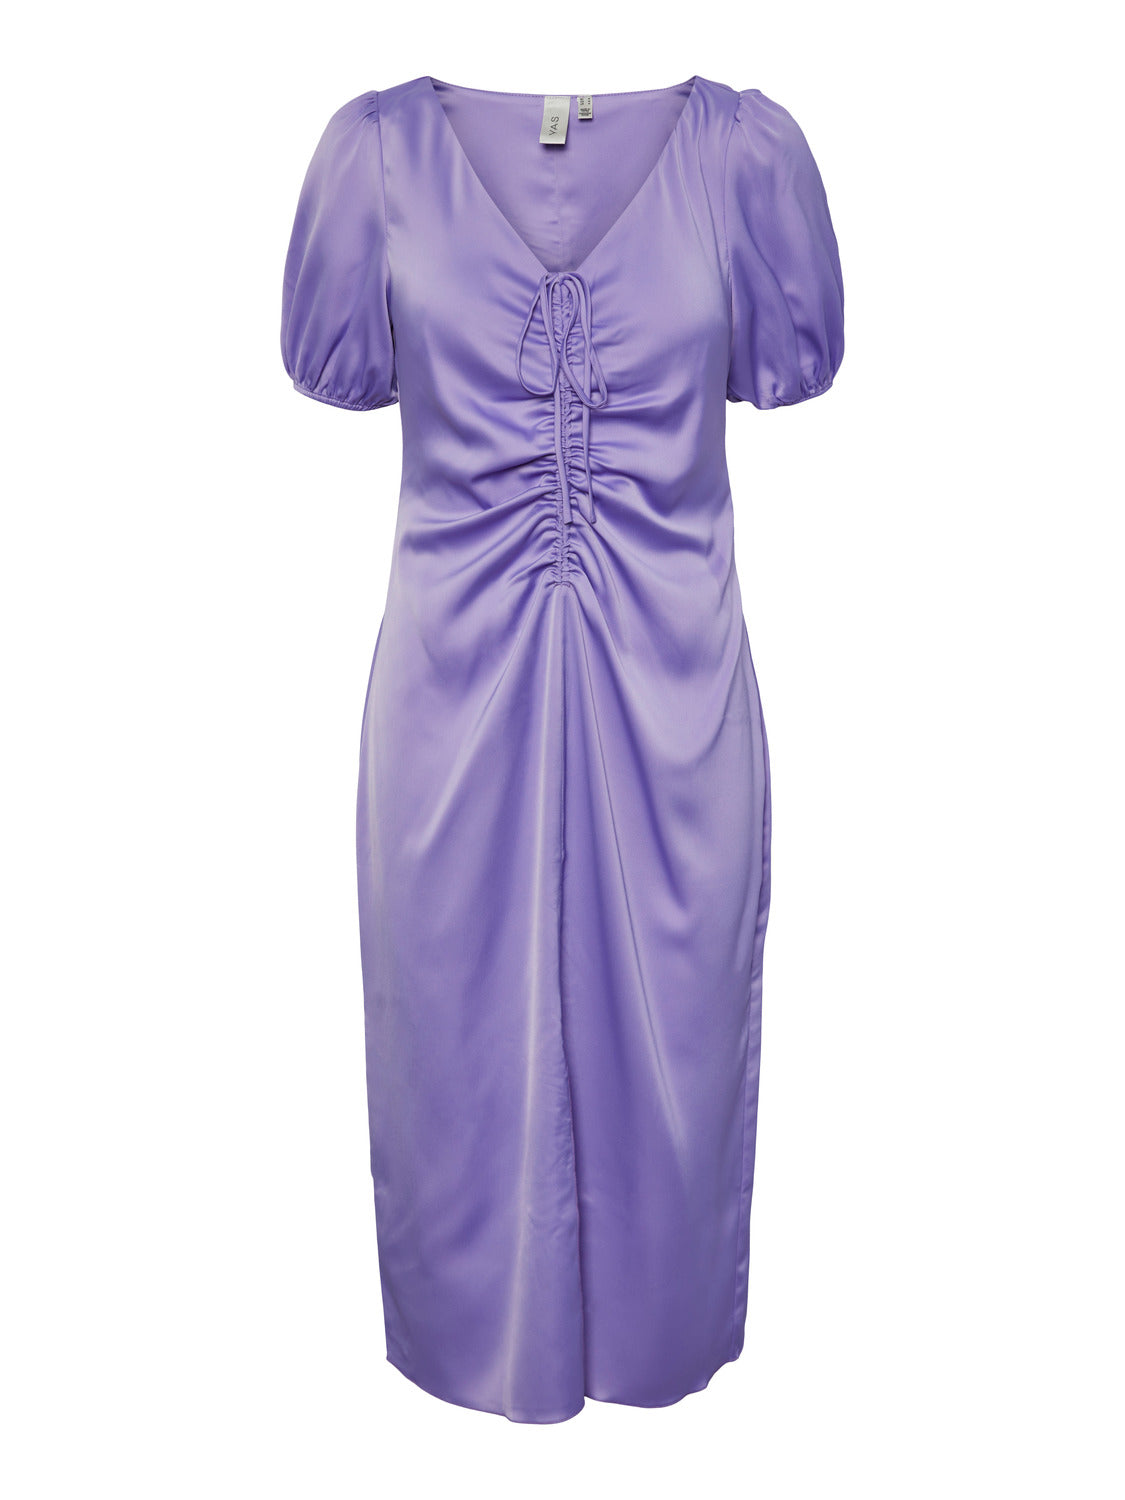 YASZURA Dress - Violet Tulip